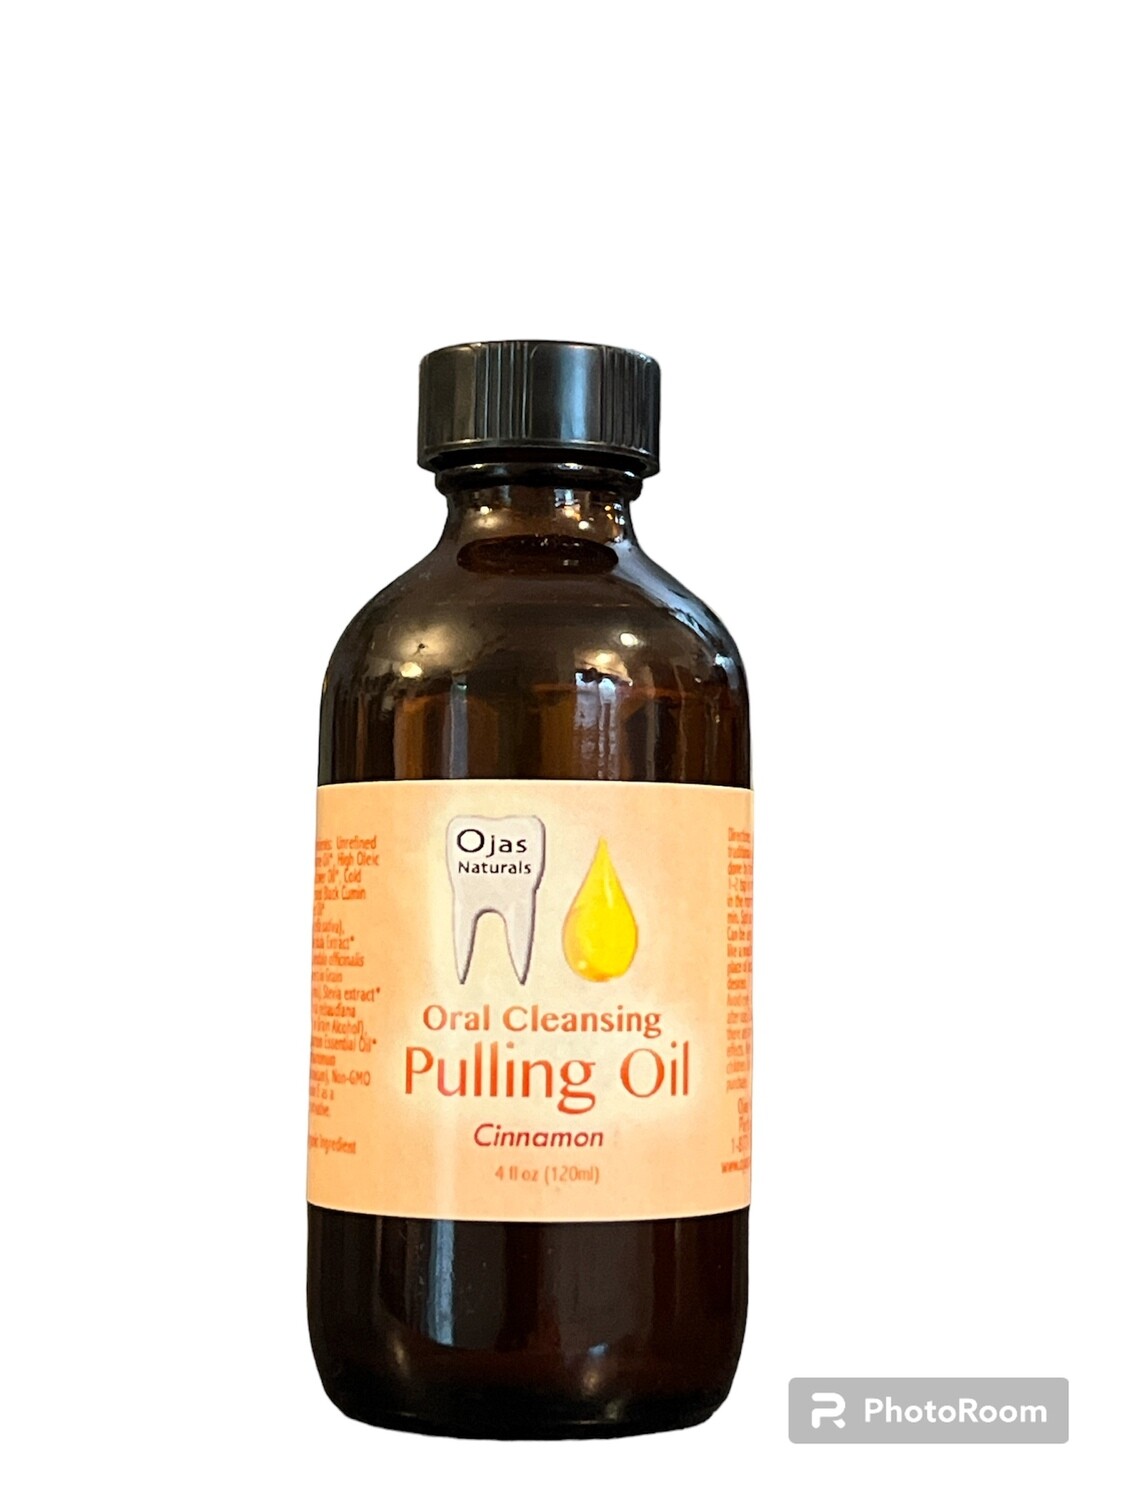 Ayurvedic Pulling Oil Cinnamon - 4oz bottle